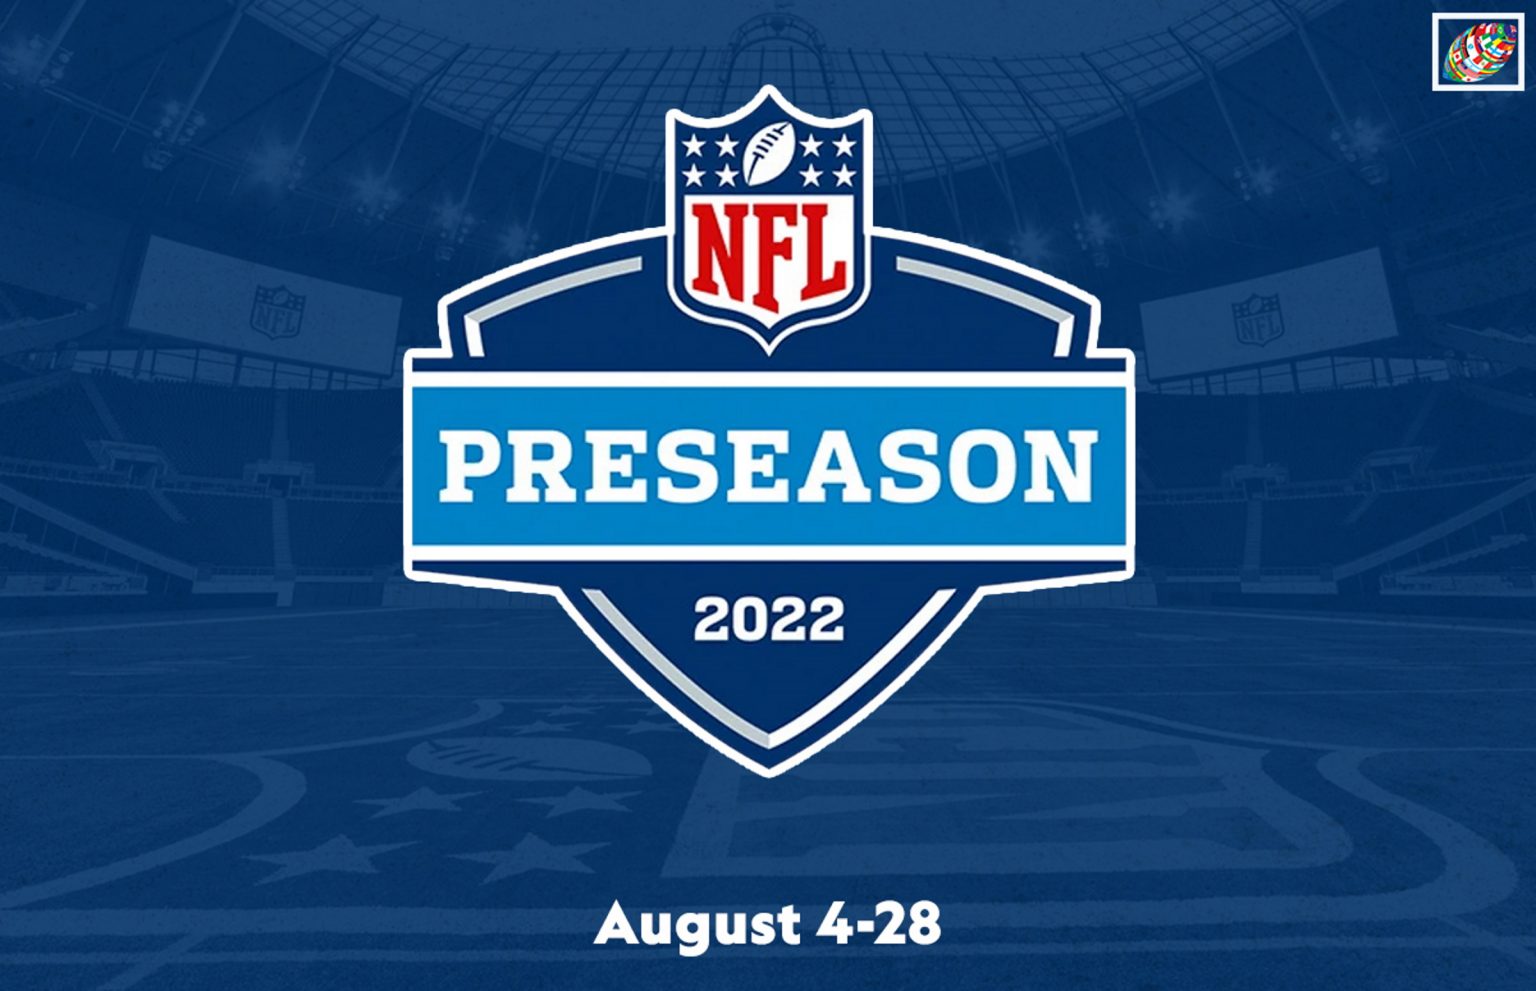 NFL preseason schedule 2022 dates, times, live streams online, TV